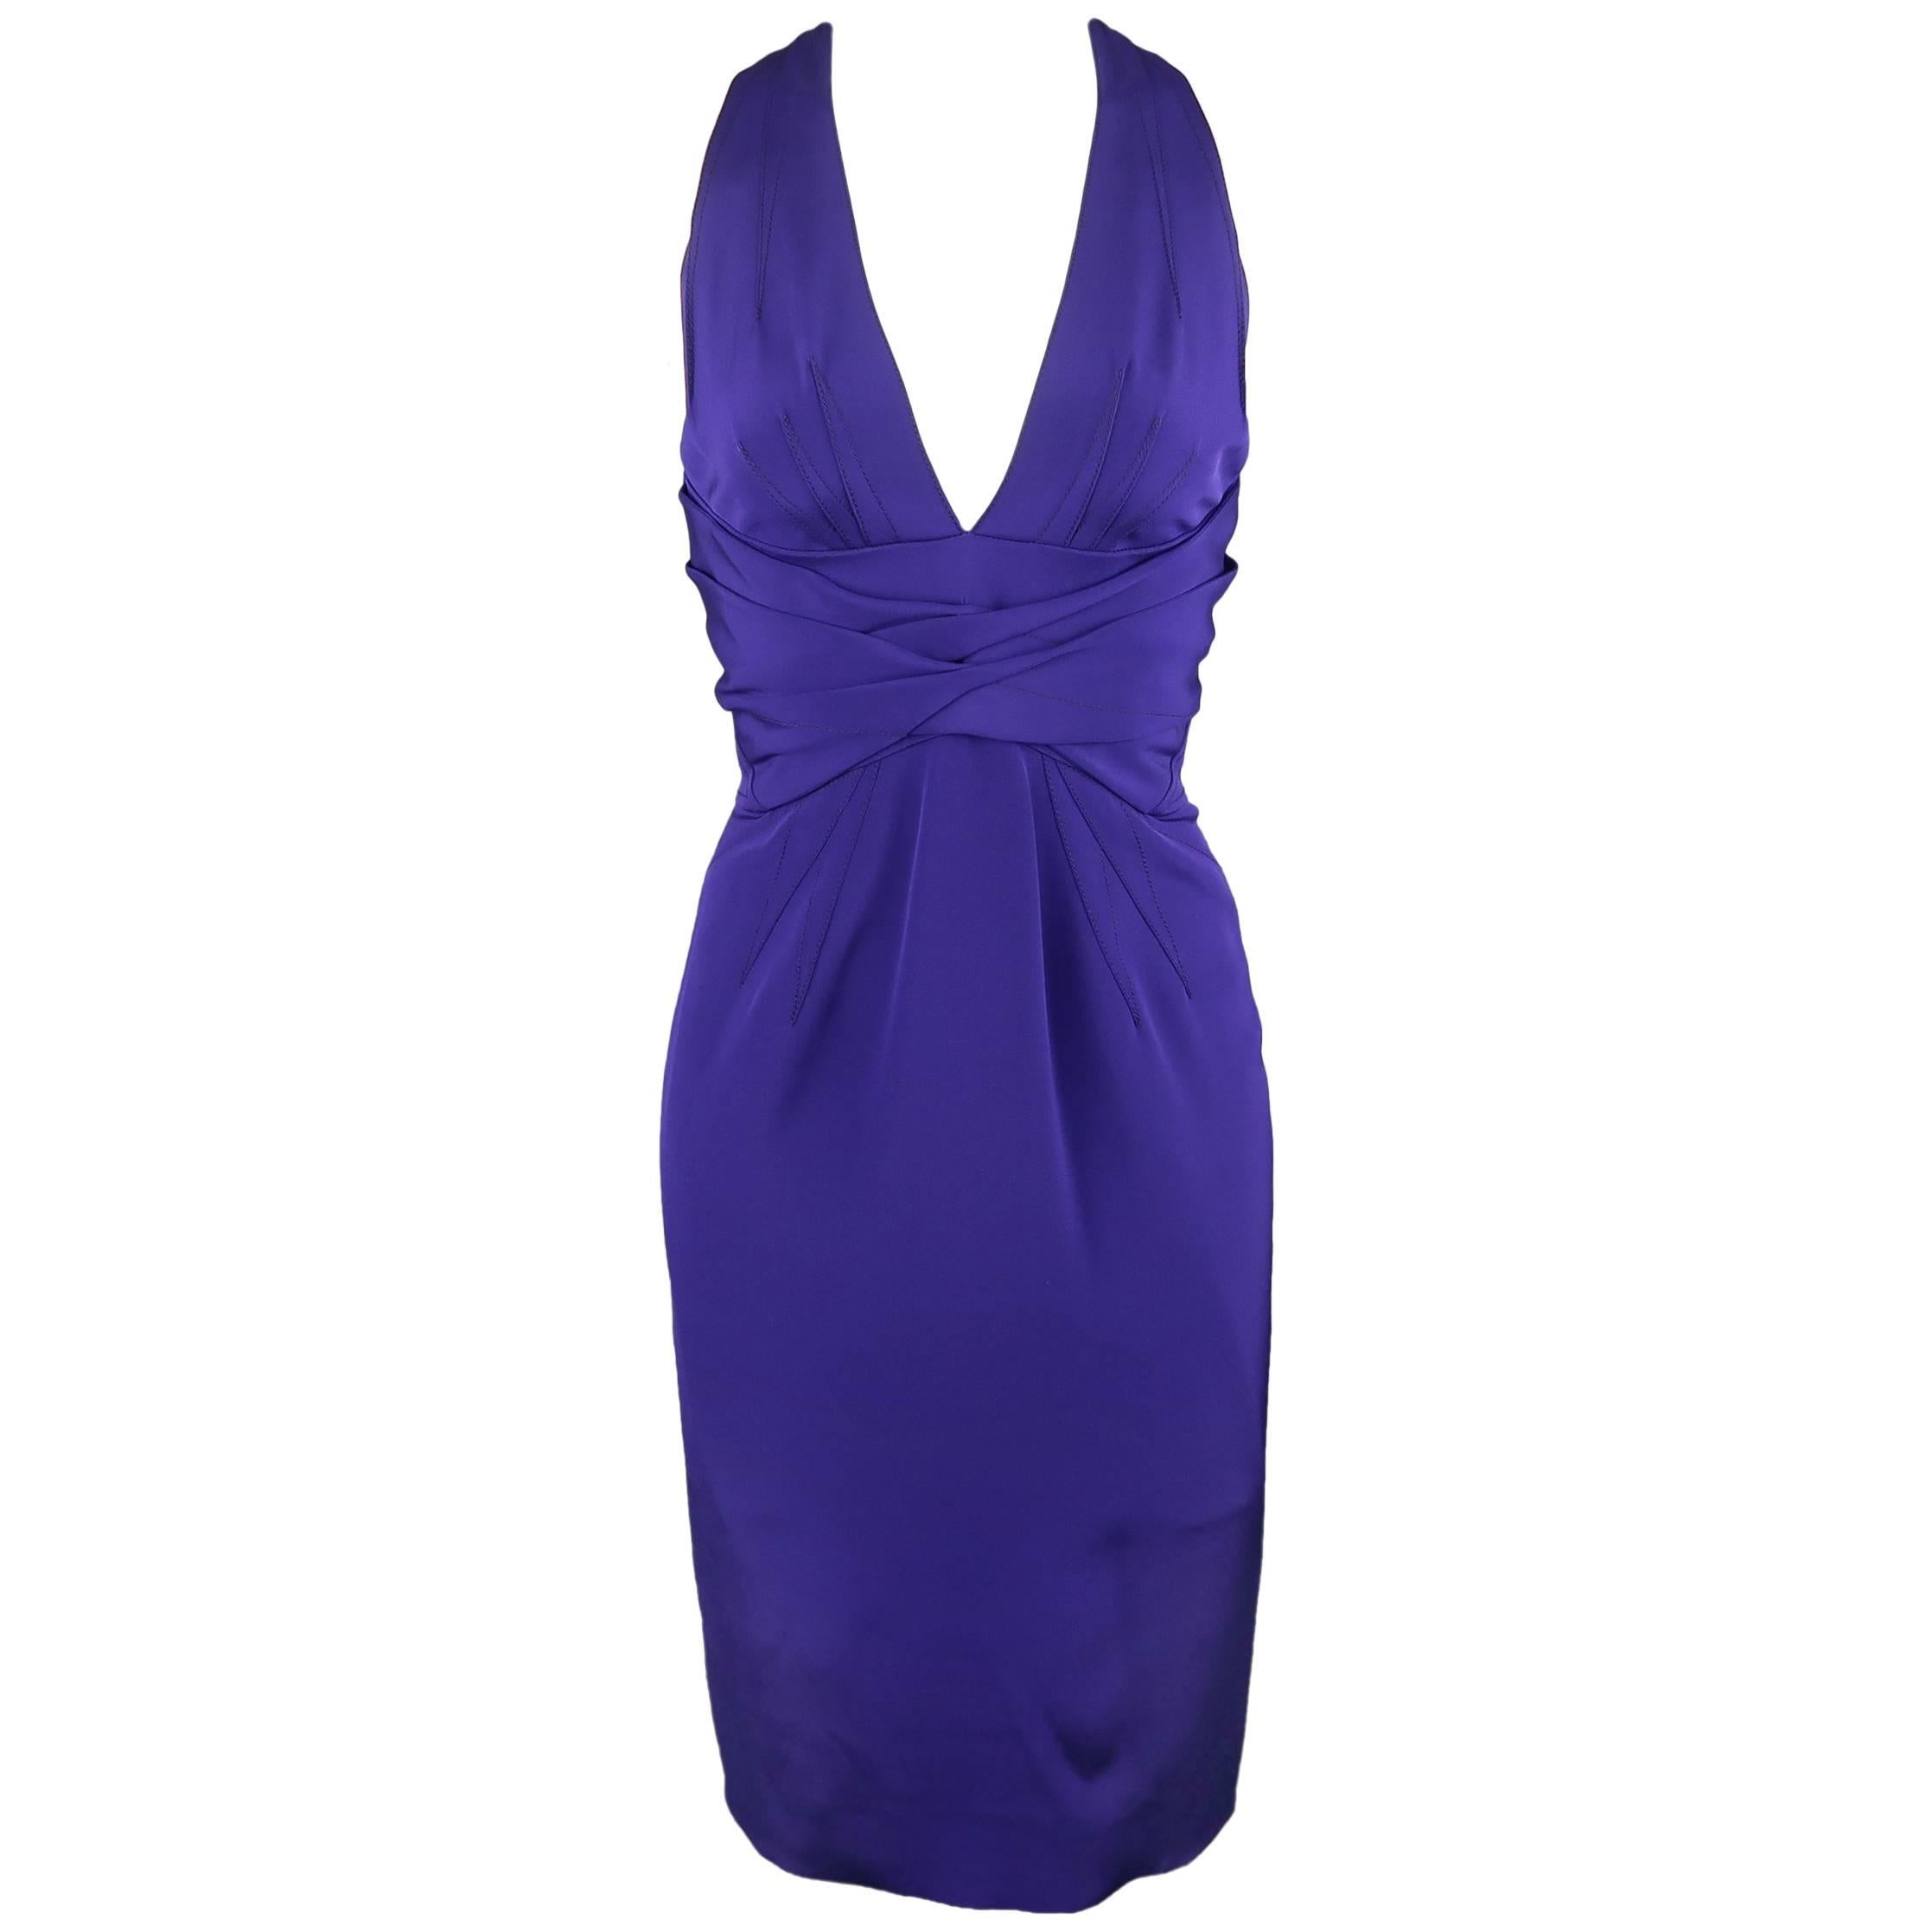 ZAC POSEN Size 2 Purple Stretch Silk Darted Halter Top Cocktail Dress ...